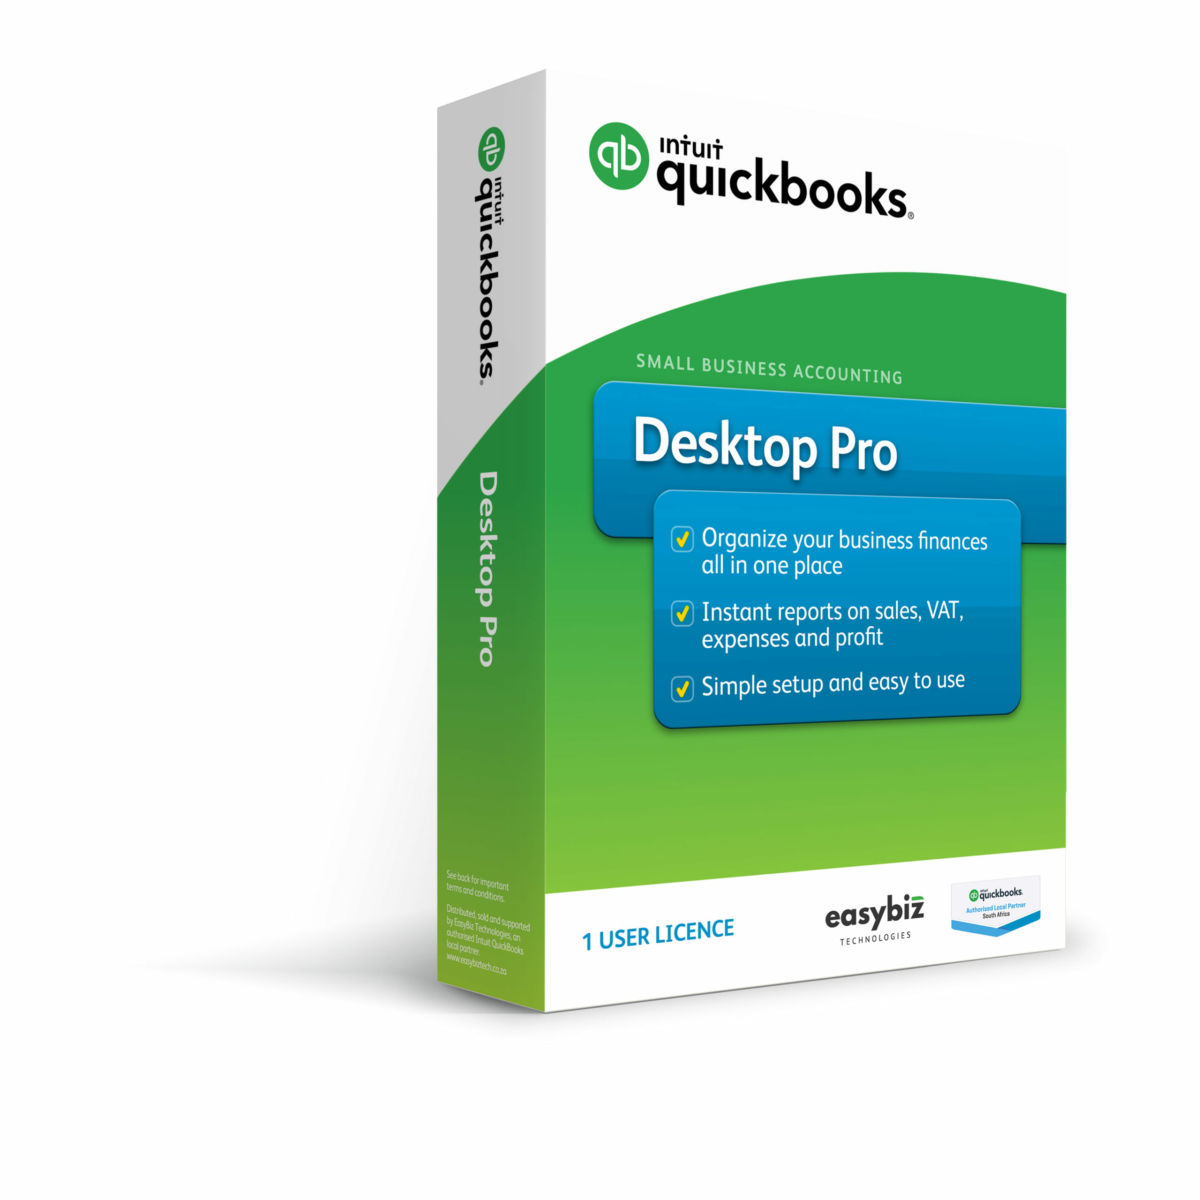 quickbooks desktop torrent